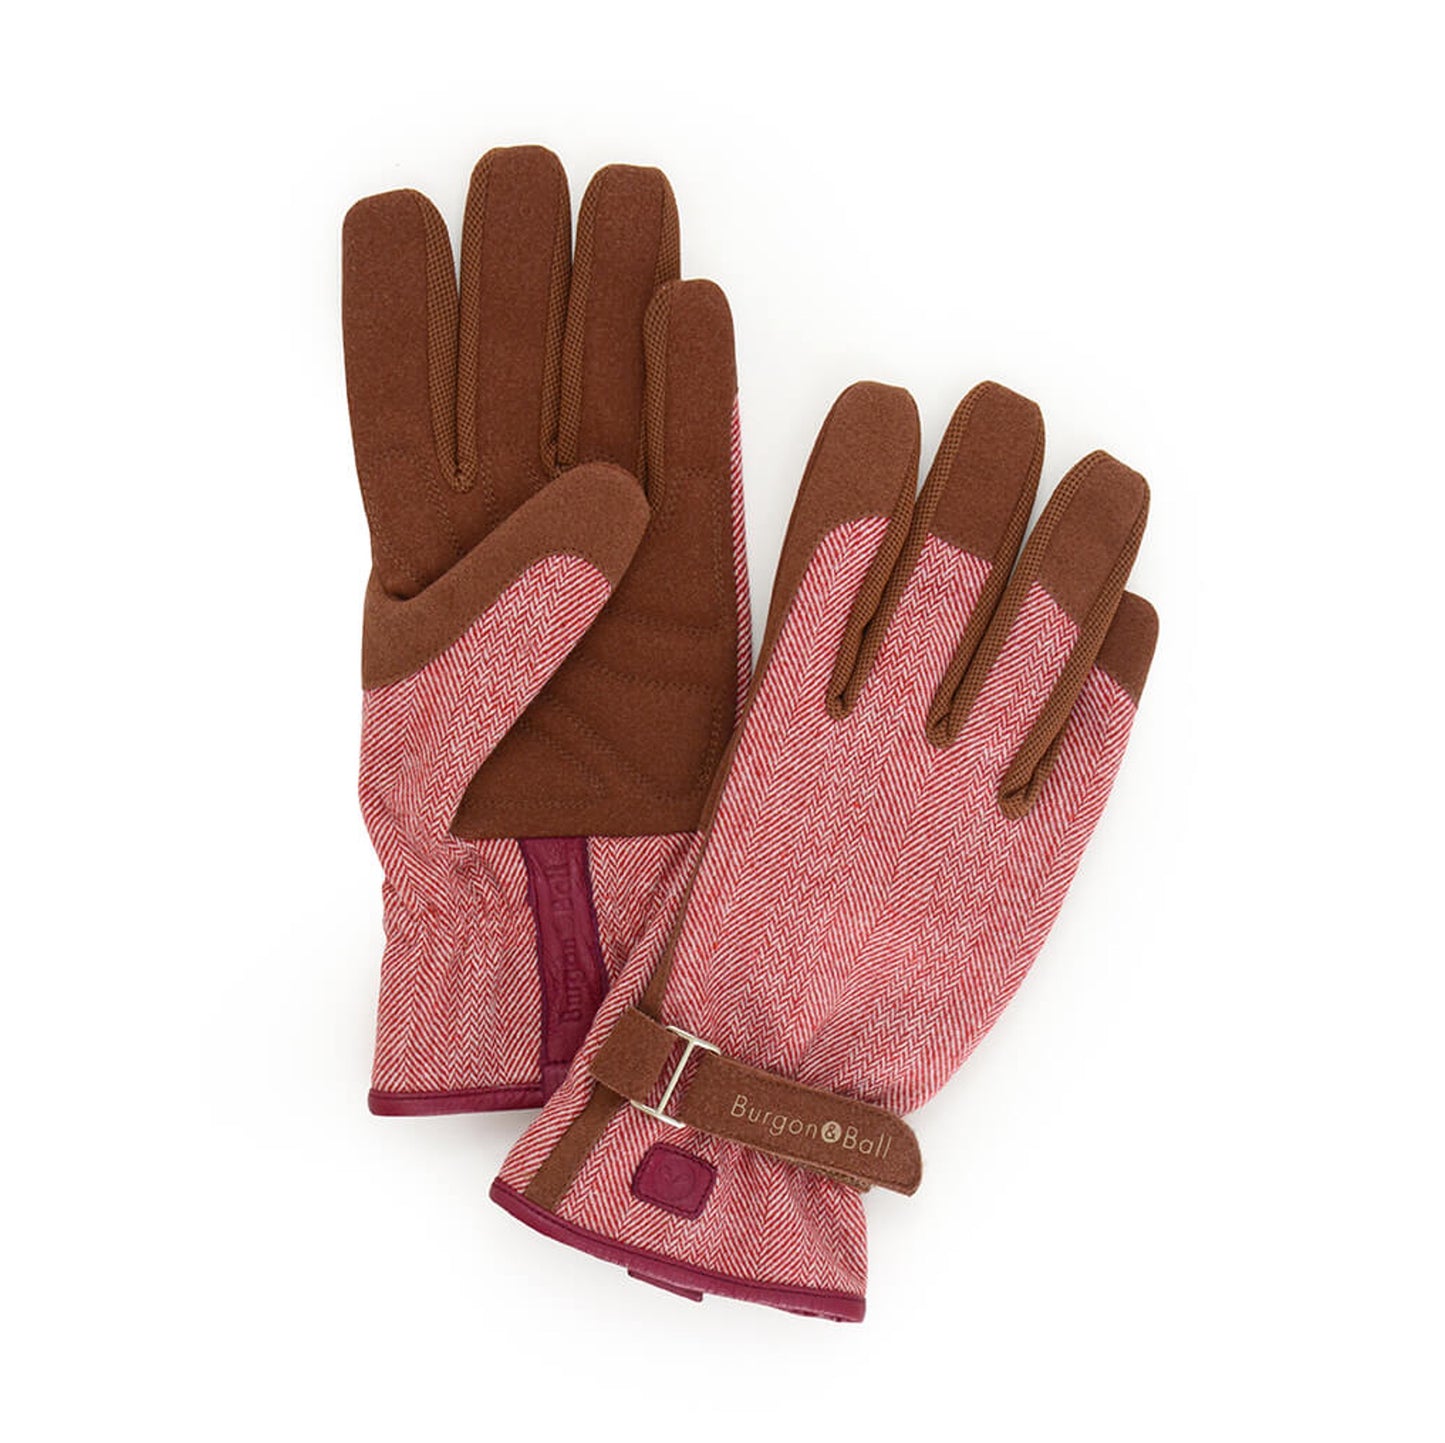 Women's Gardening Gloves - Red Tweed